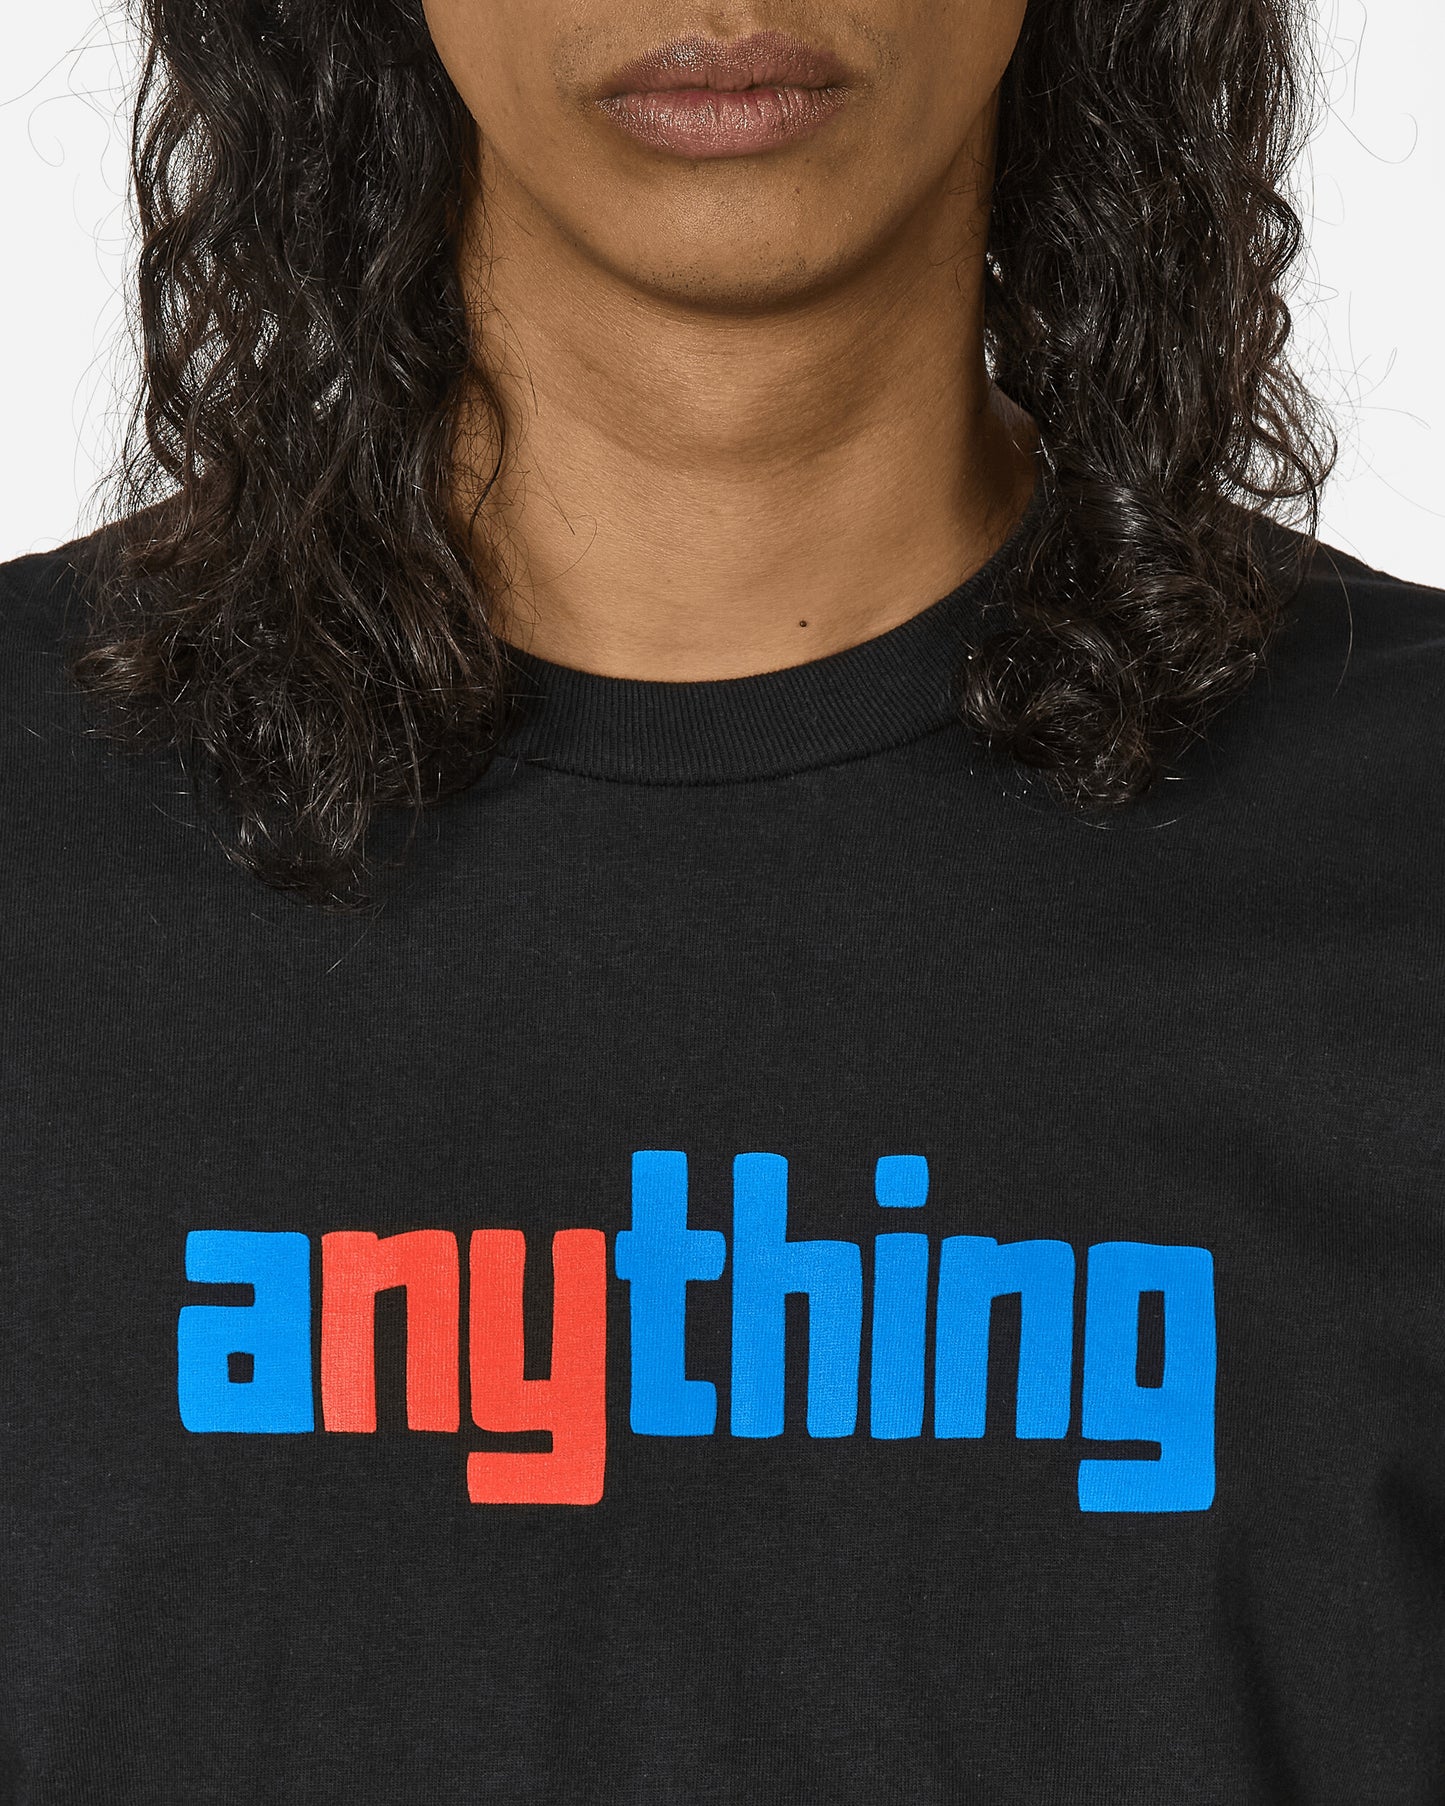 aNYthing Speeball Logo T-Shirt Black T-Shirts Shortsleeve ANY-064 BK